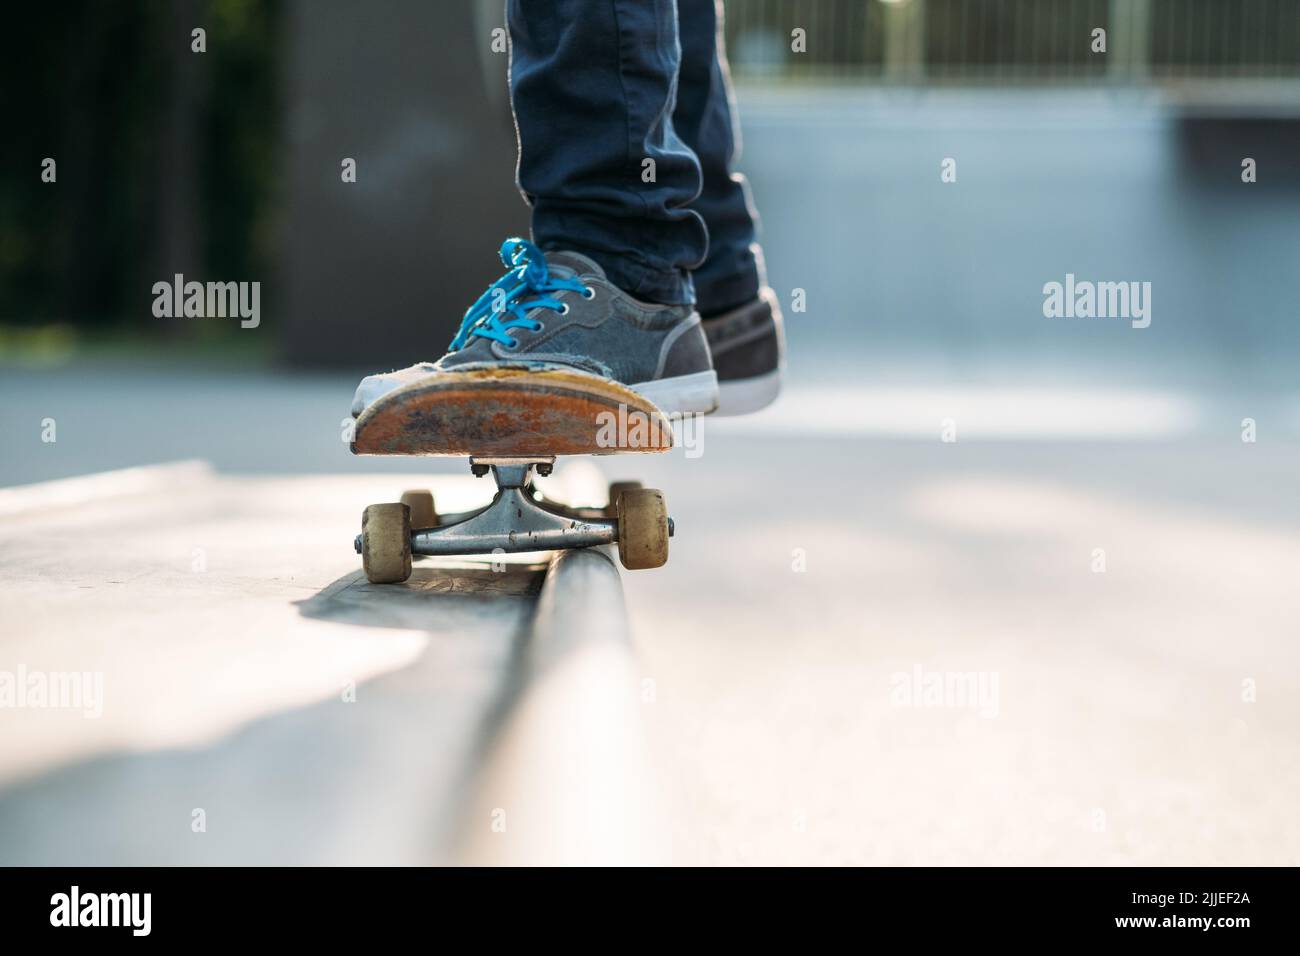 skateboarder feet habit active lifestyle man Stock Photo